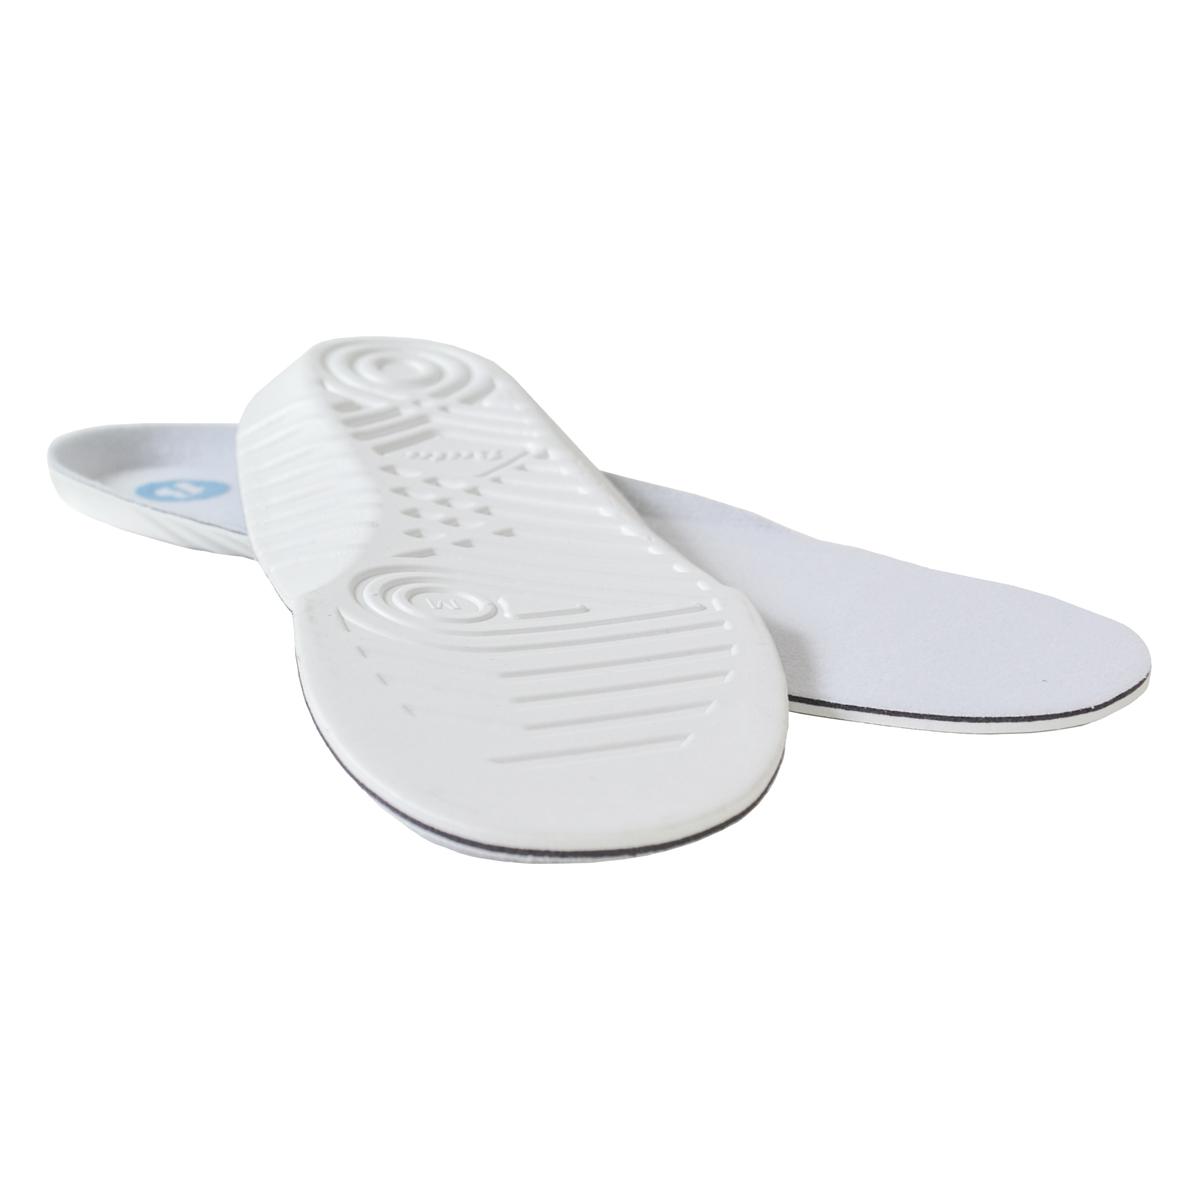 Bata Comfort Insole-Bata Industrials Footwear